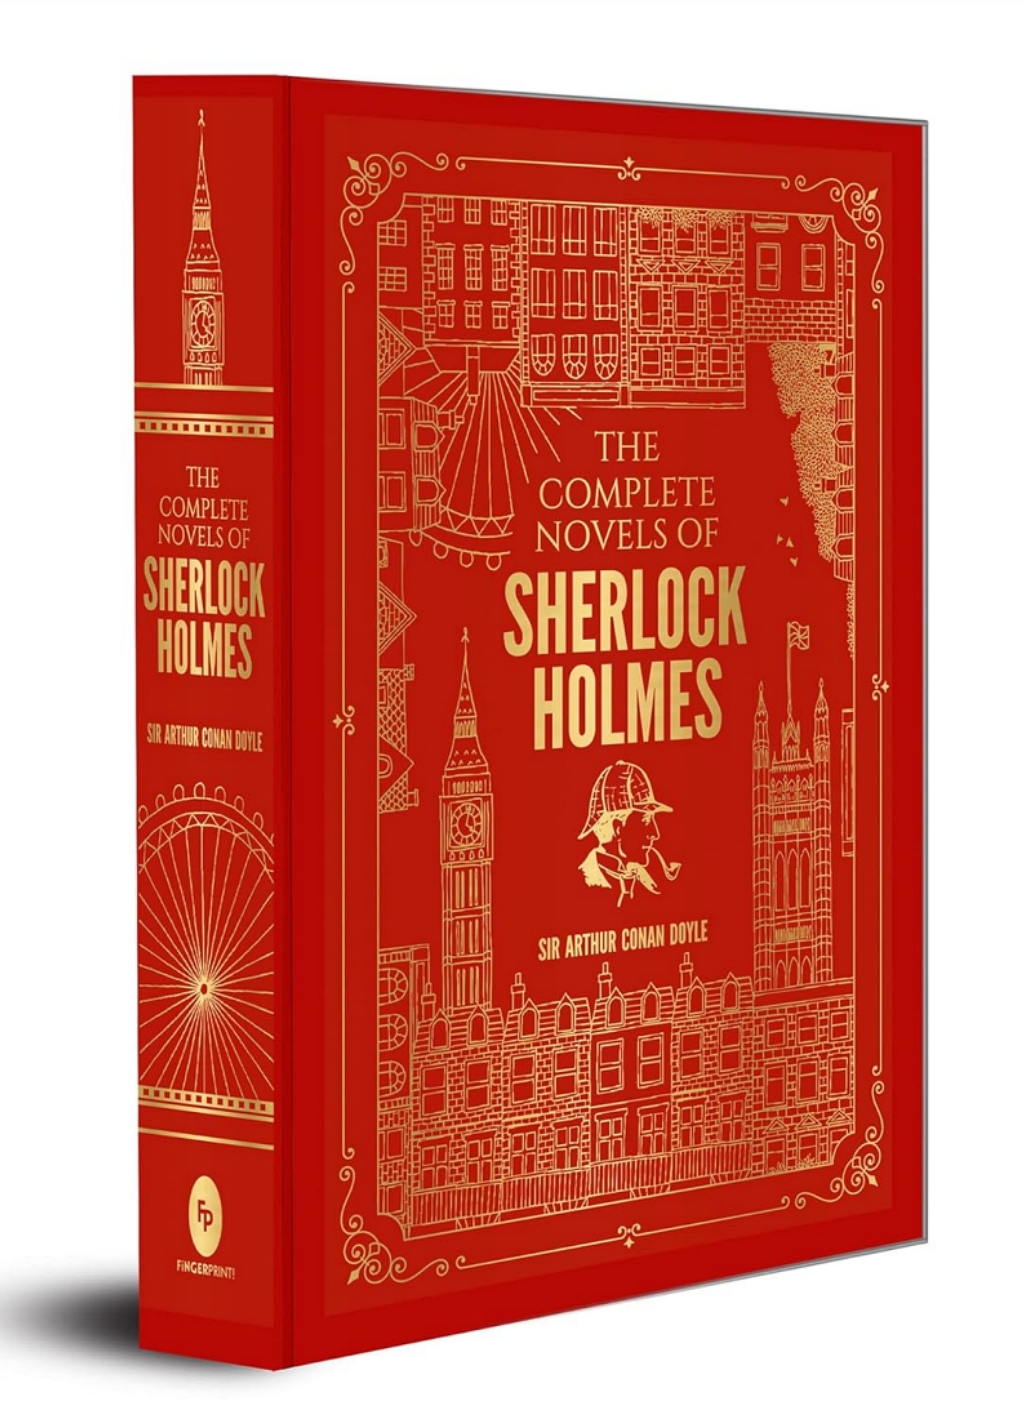 The Complete Novels of Sherlock Holmes | amazon.com